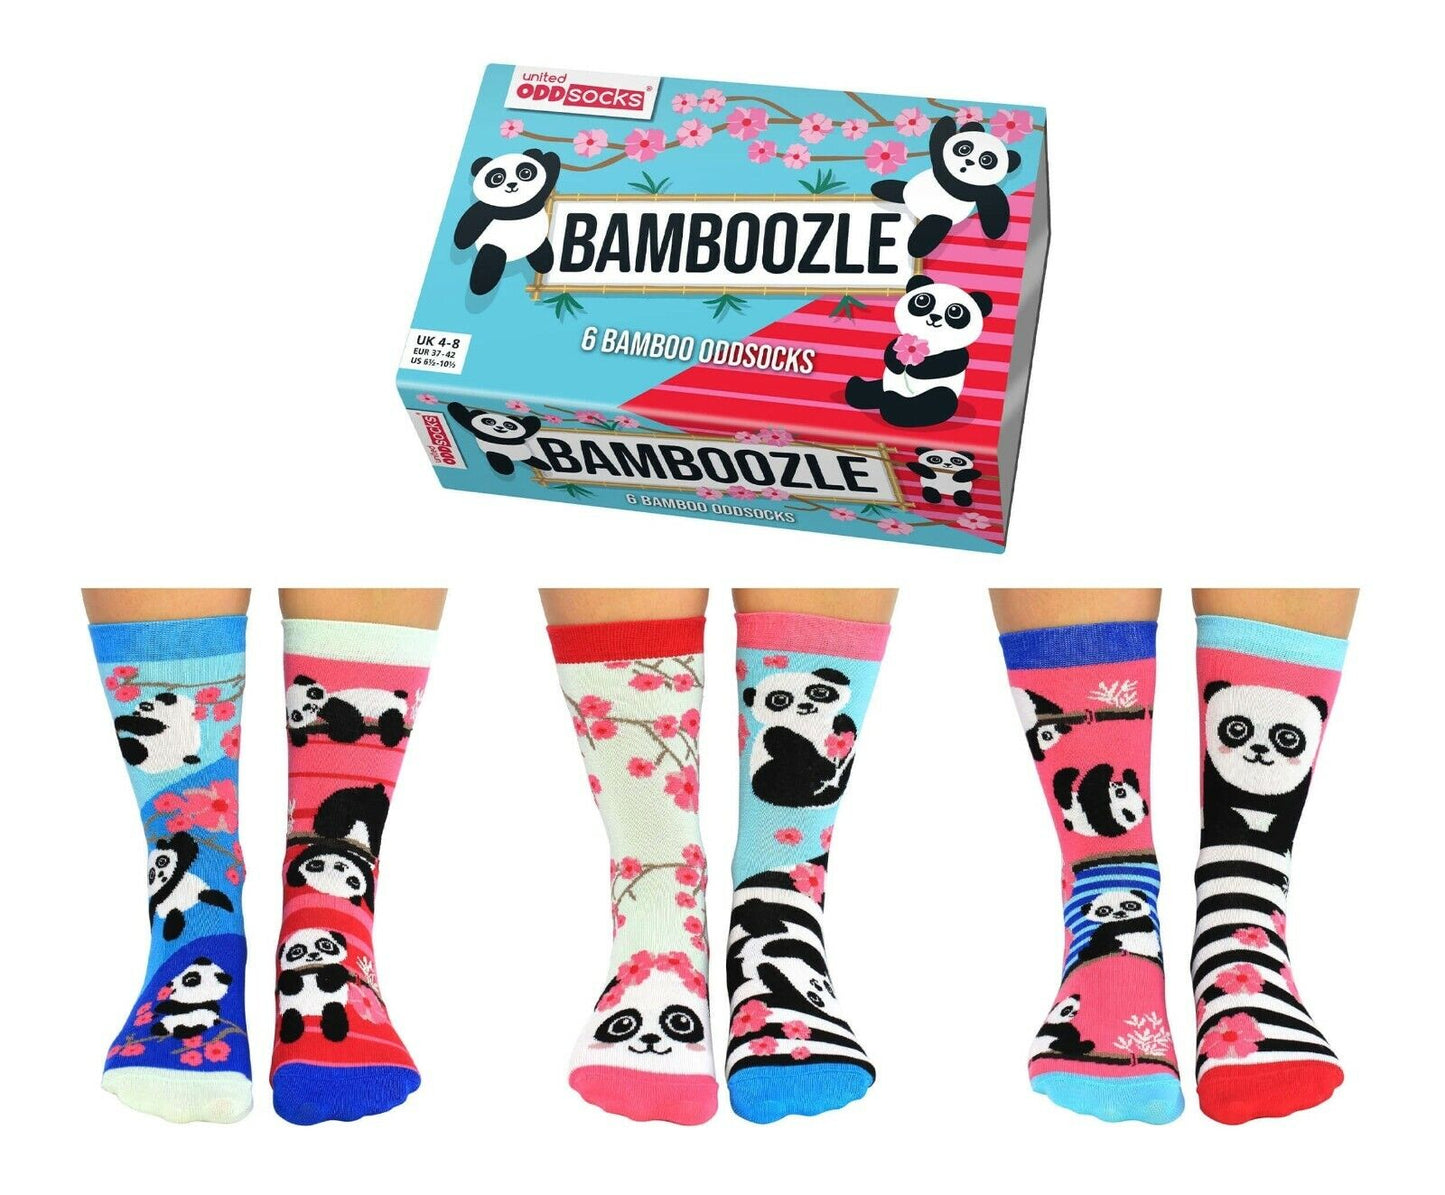 Bamboozle 6 Odd Socks Gift Box-Ladies Size 4-8